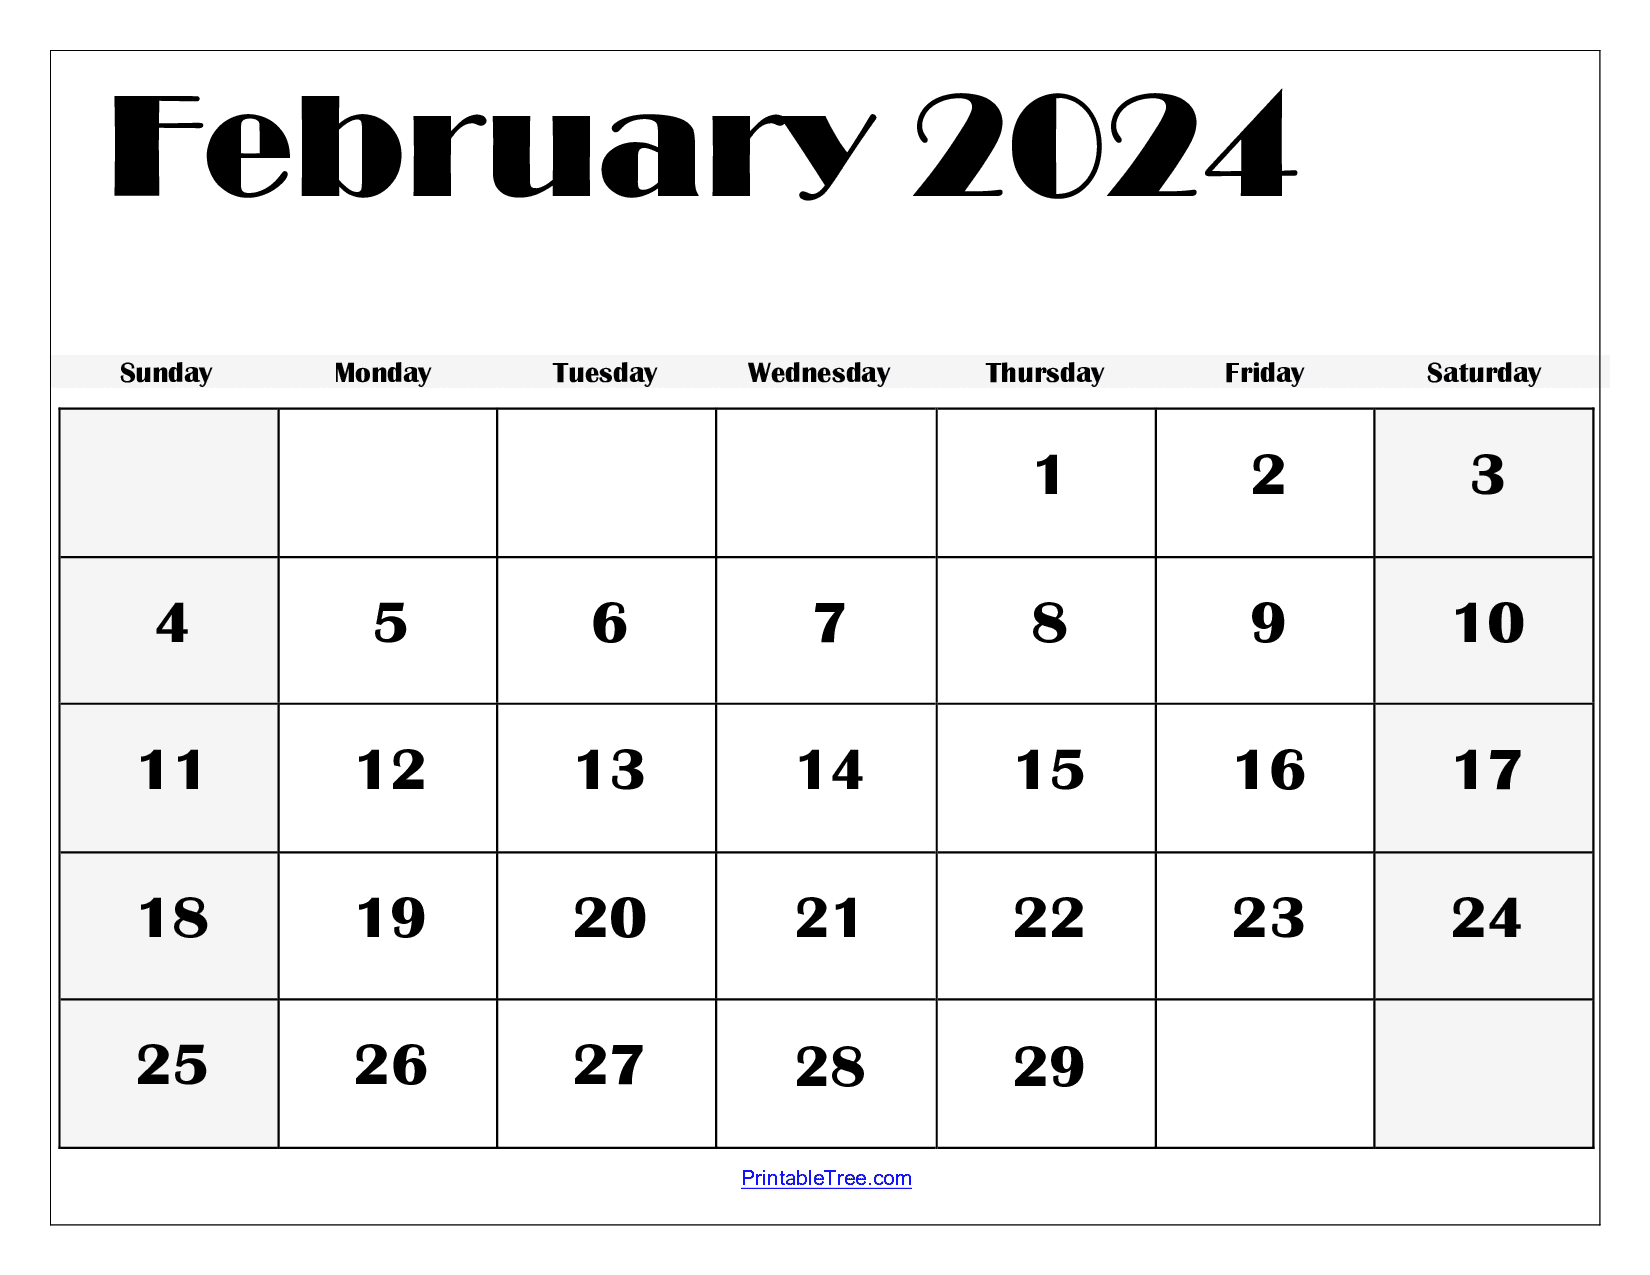 February 2024 Calendar Printable Pdf Template With Holidays for February Calendar 2024 Printable Free